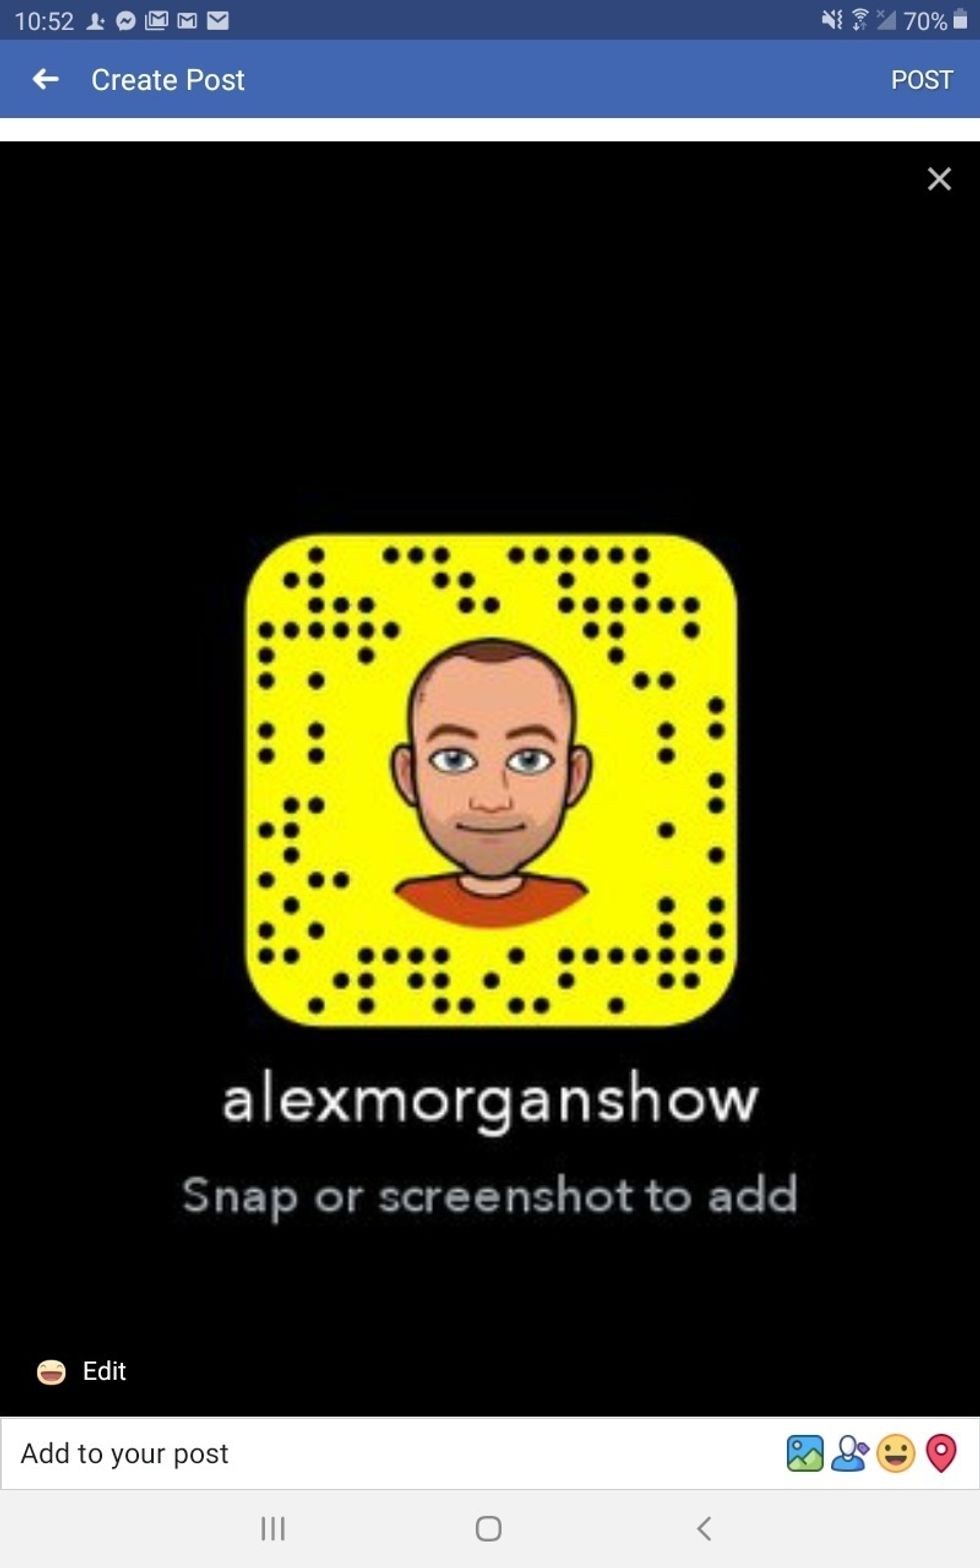 Add Alex Morgan Show on SnapChat